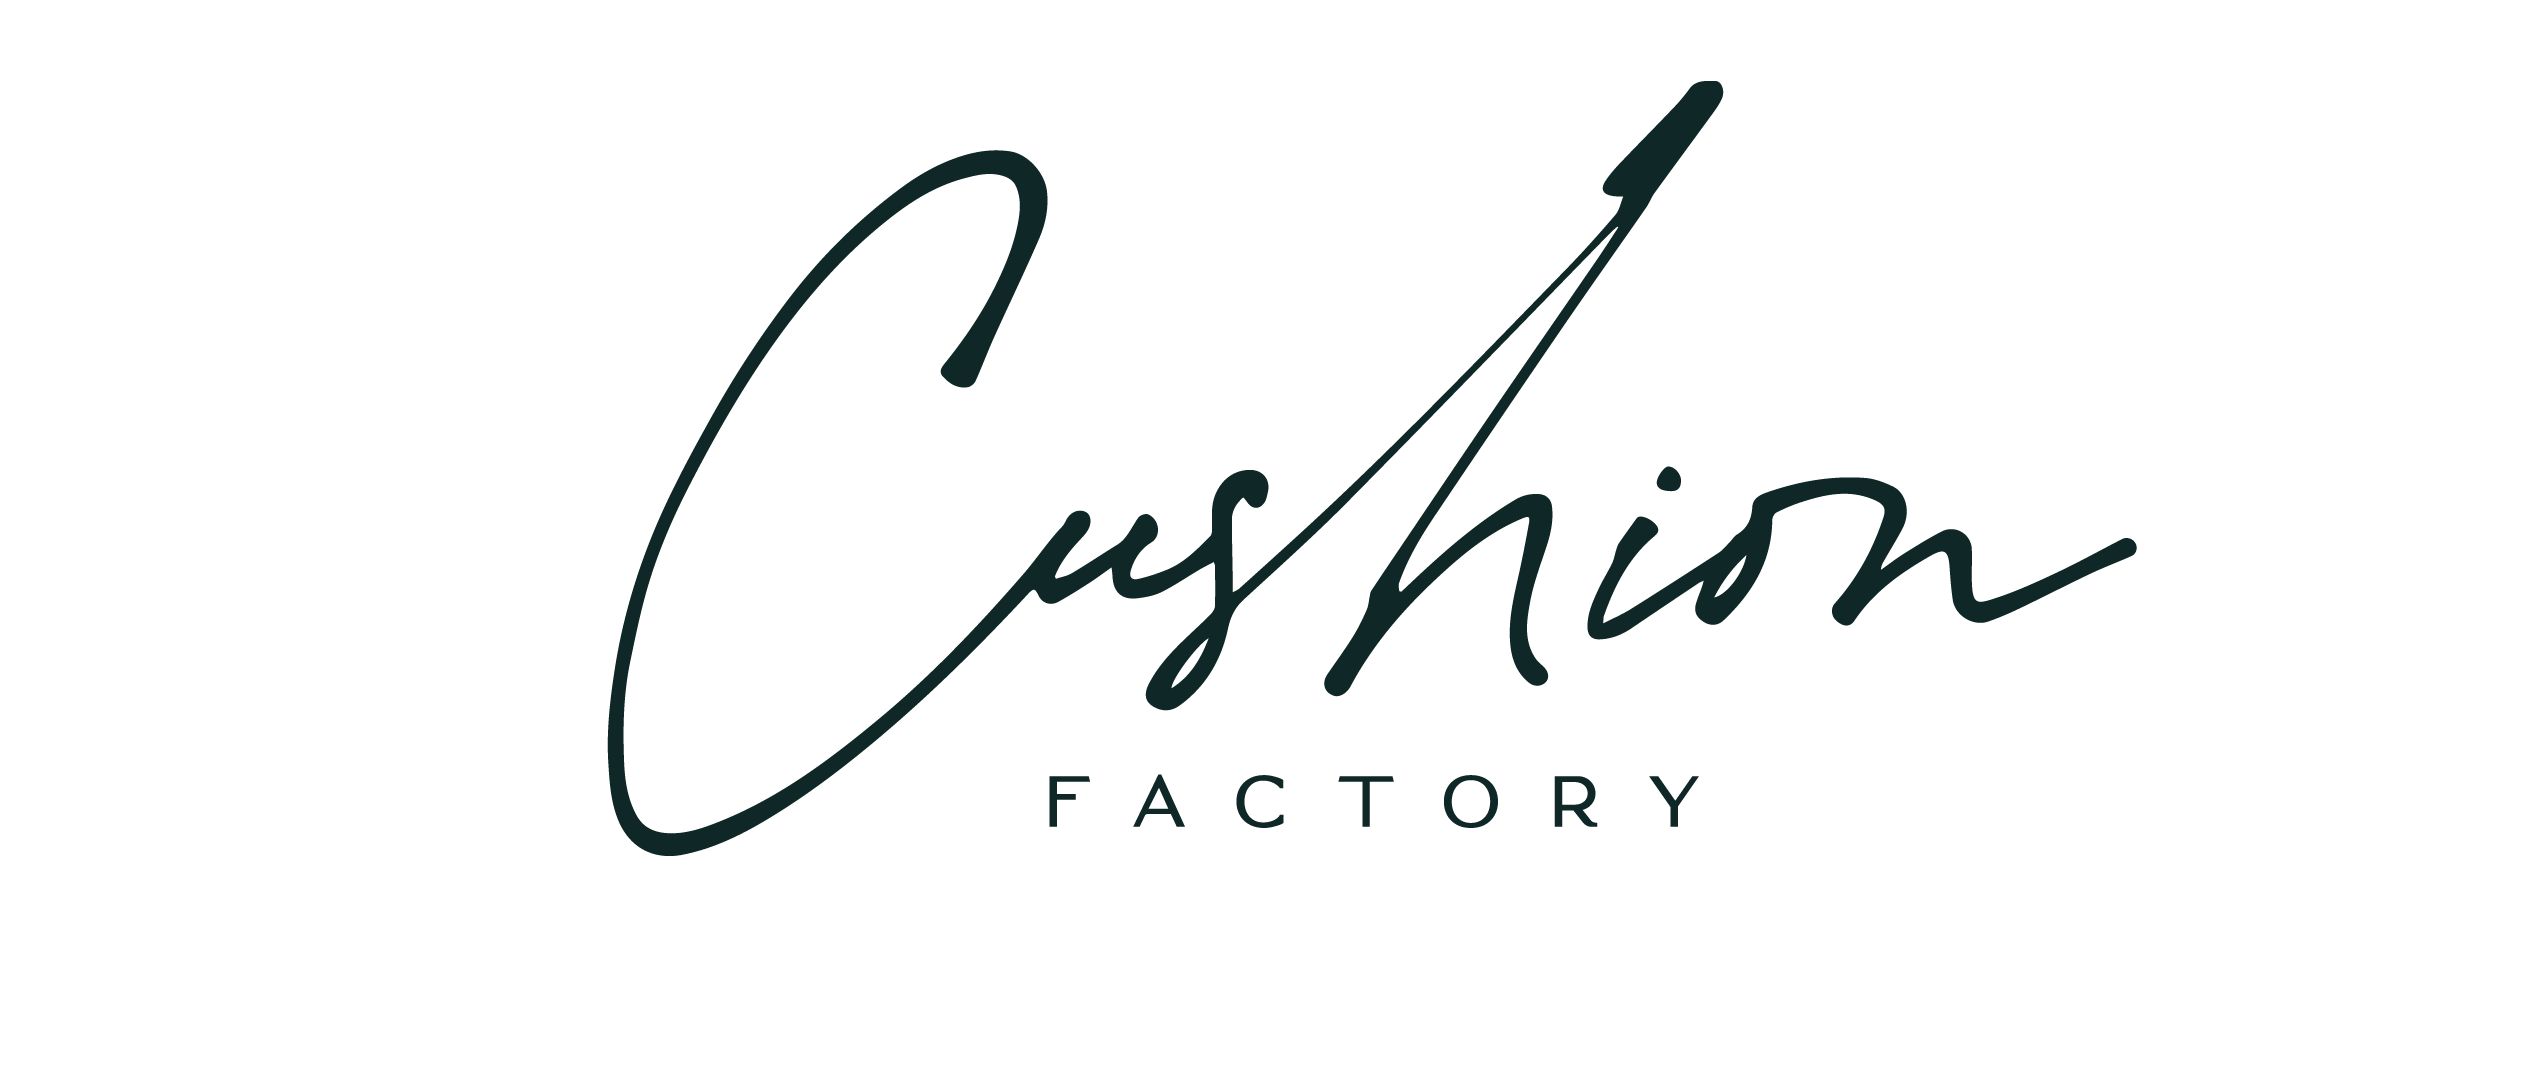 Cushion Factory